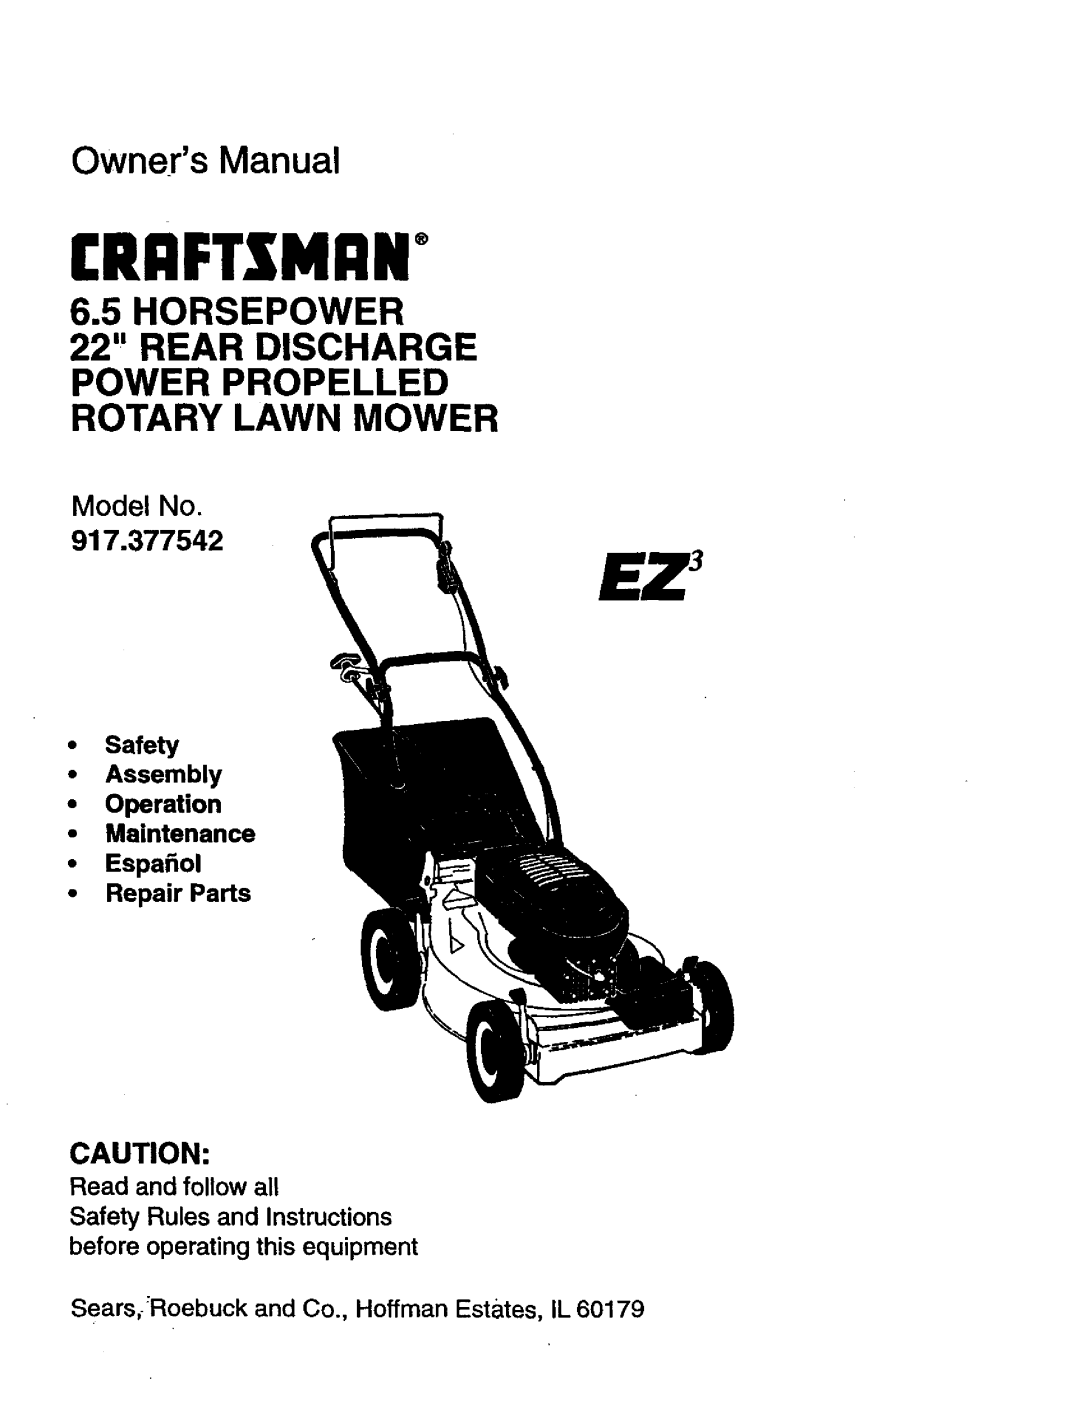 Craftsman 917.377542 owner manual Model No, Safety Assembly Operation Maintenance, Espafiol Repair Parts, Craftzman 